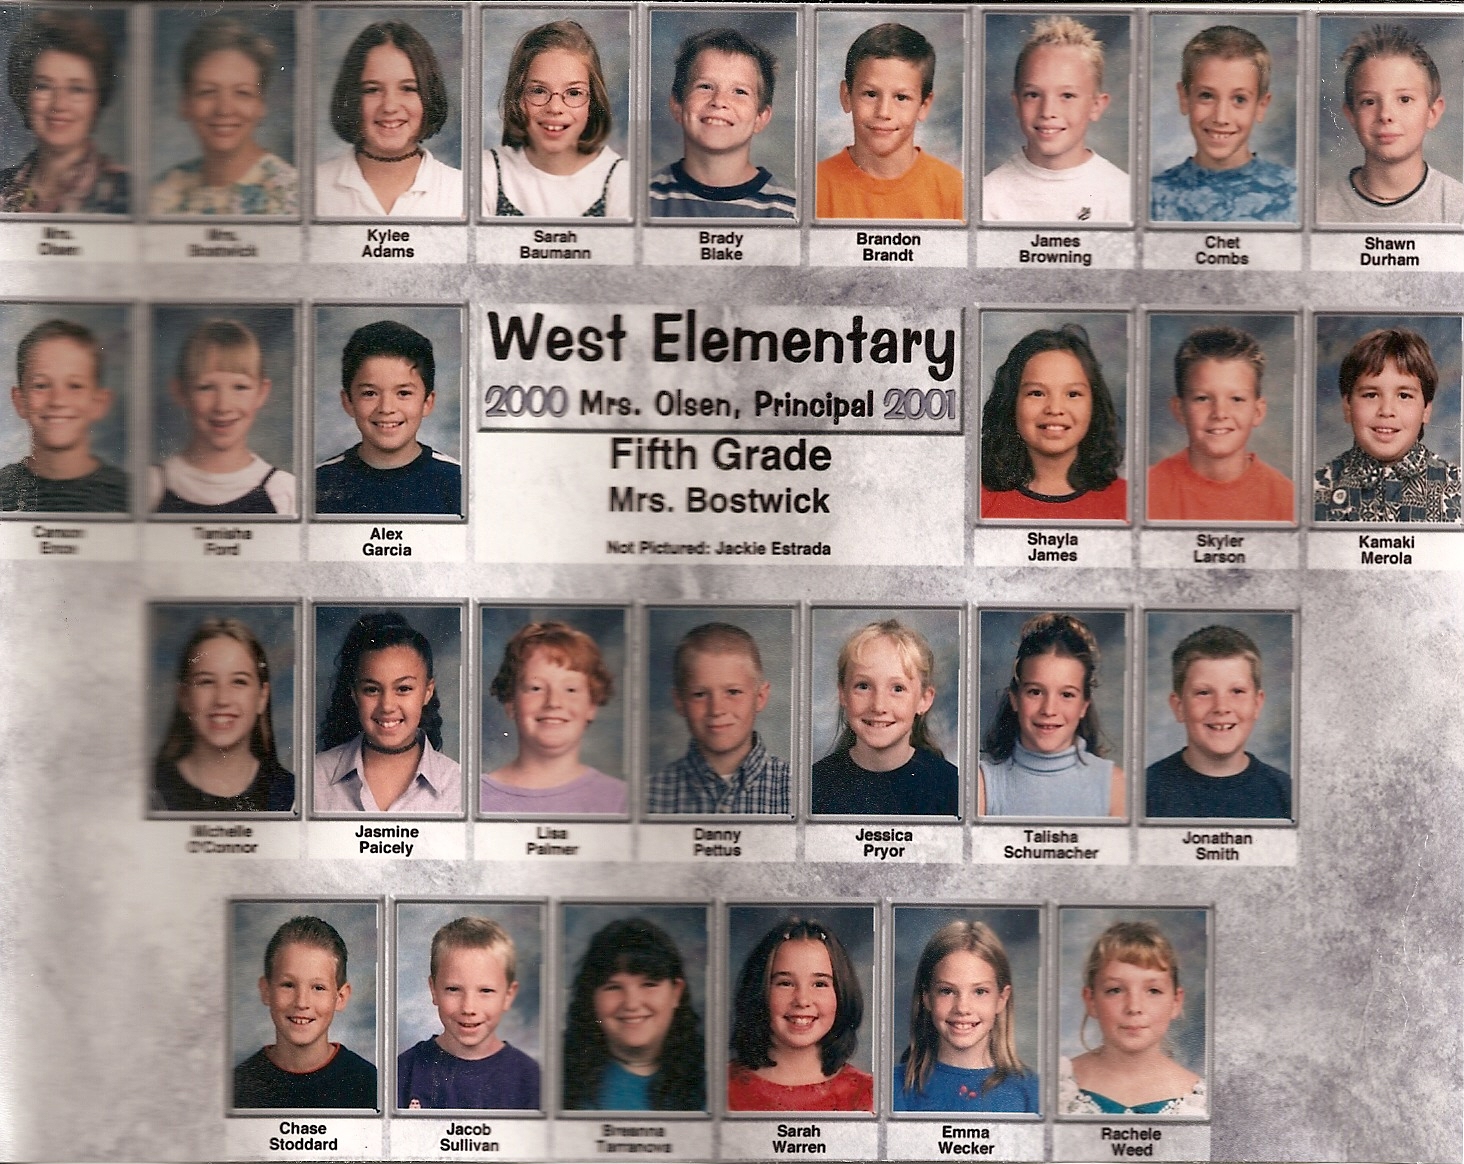 Mrs. Bostwick's 2000-2001 fifth grade class at West Elementary School